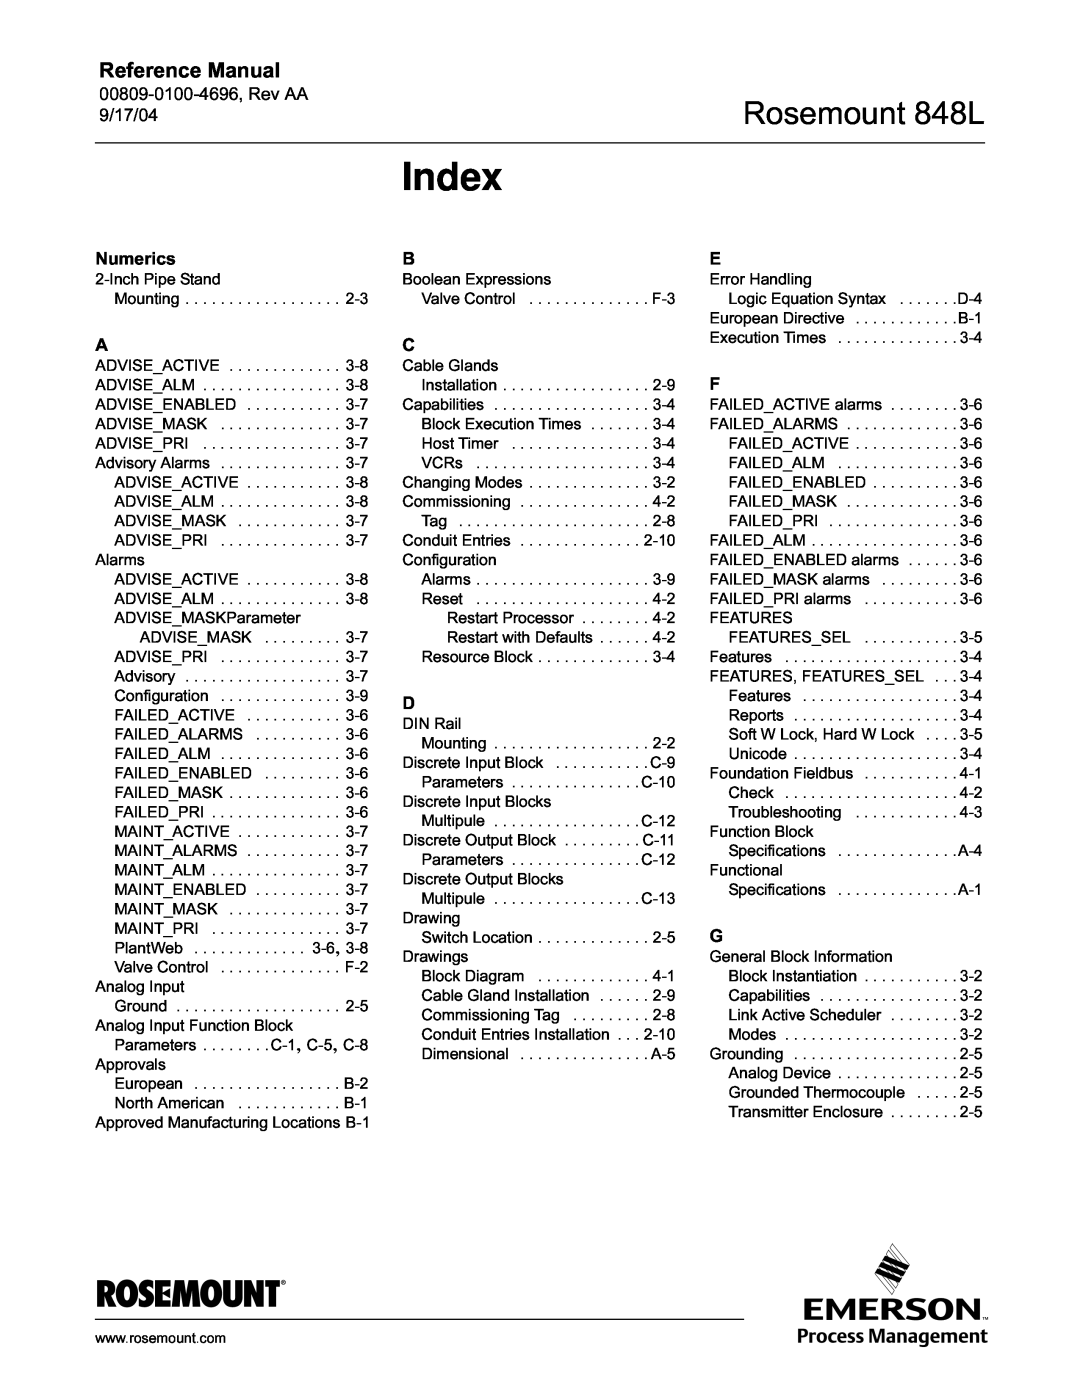 Emerson manual Index, Rosemount 848L, Reference Manual, 00809-0100-4696,Rev AA 9/17/04, Numerics 